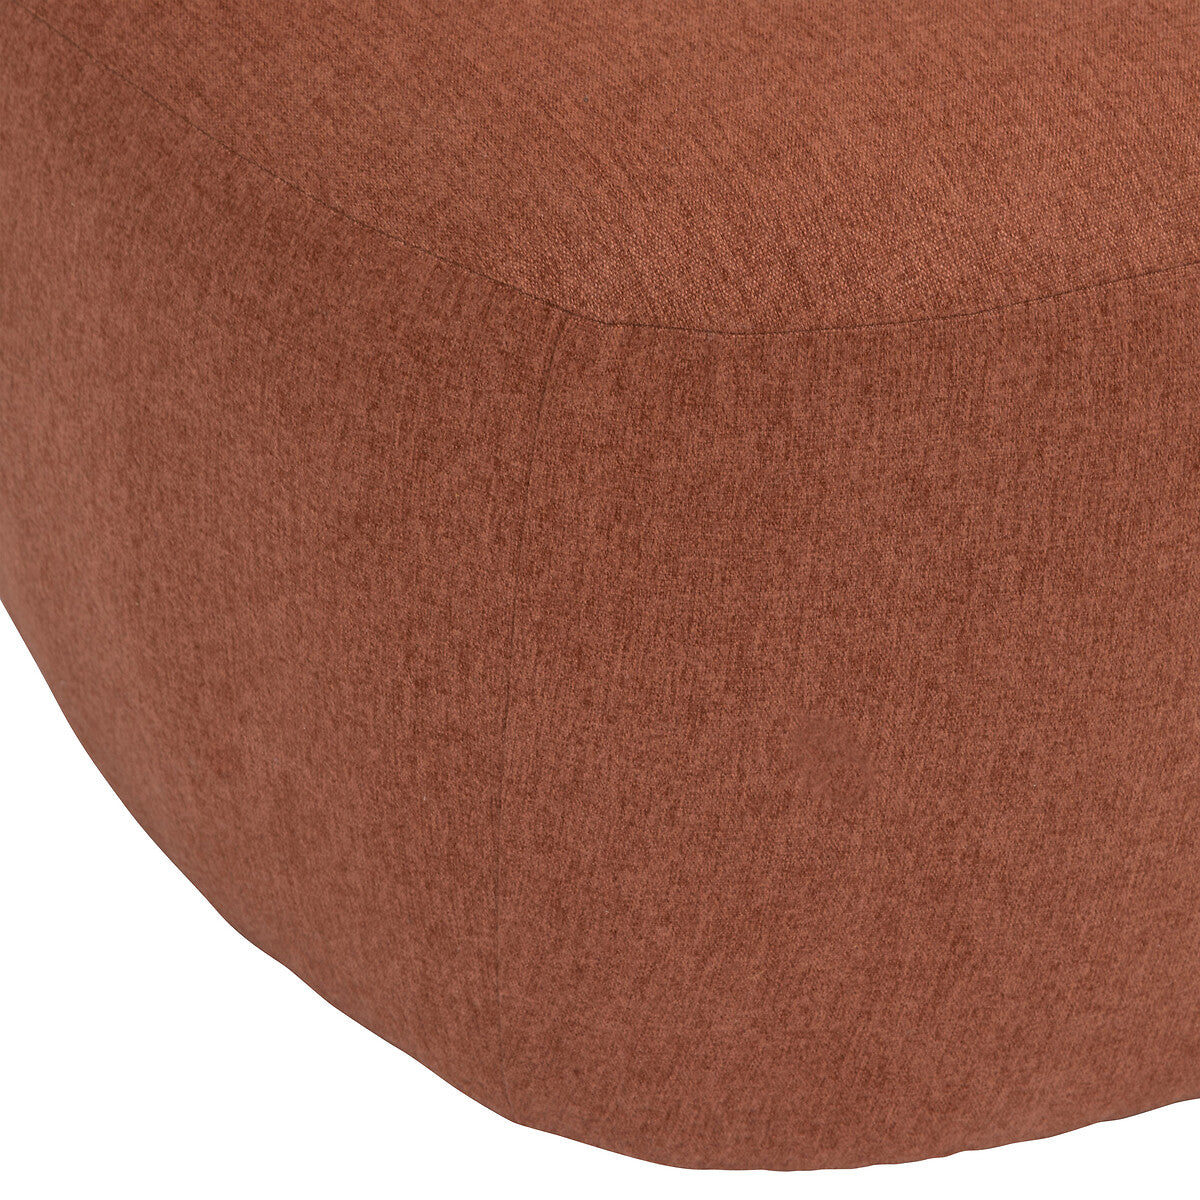 BEAU Amalia fabric armchair - L65xD71xH68cm - Terracotta